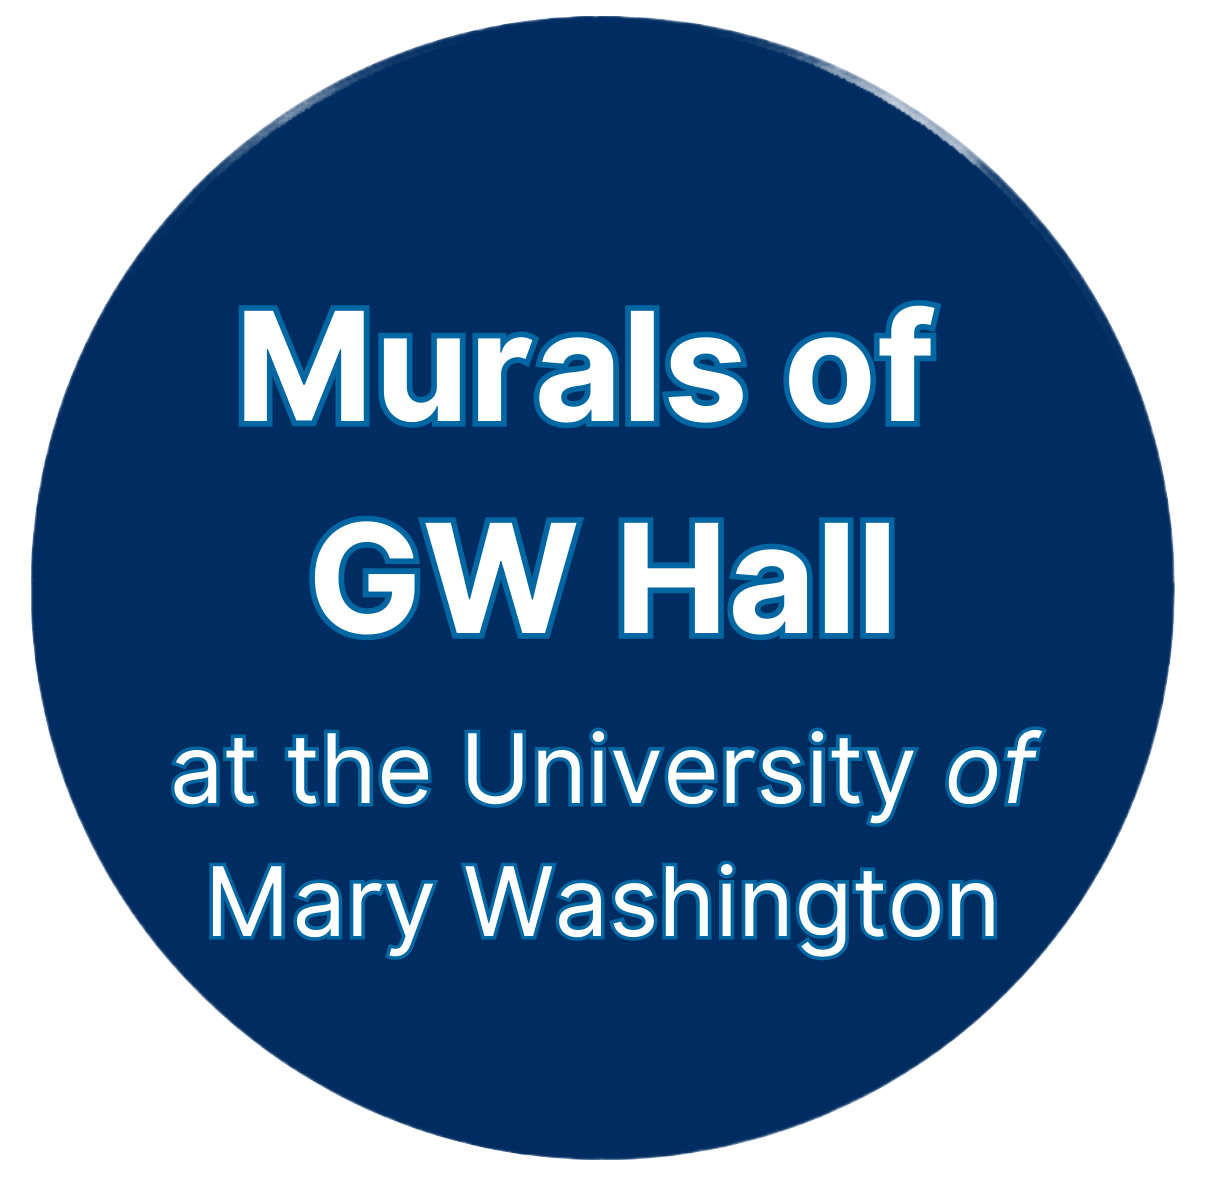 Murals of George Washington Hall at the University of Mary Washington